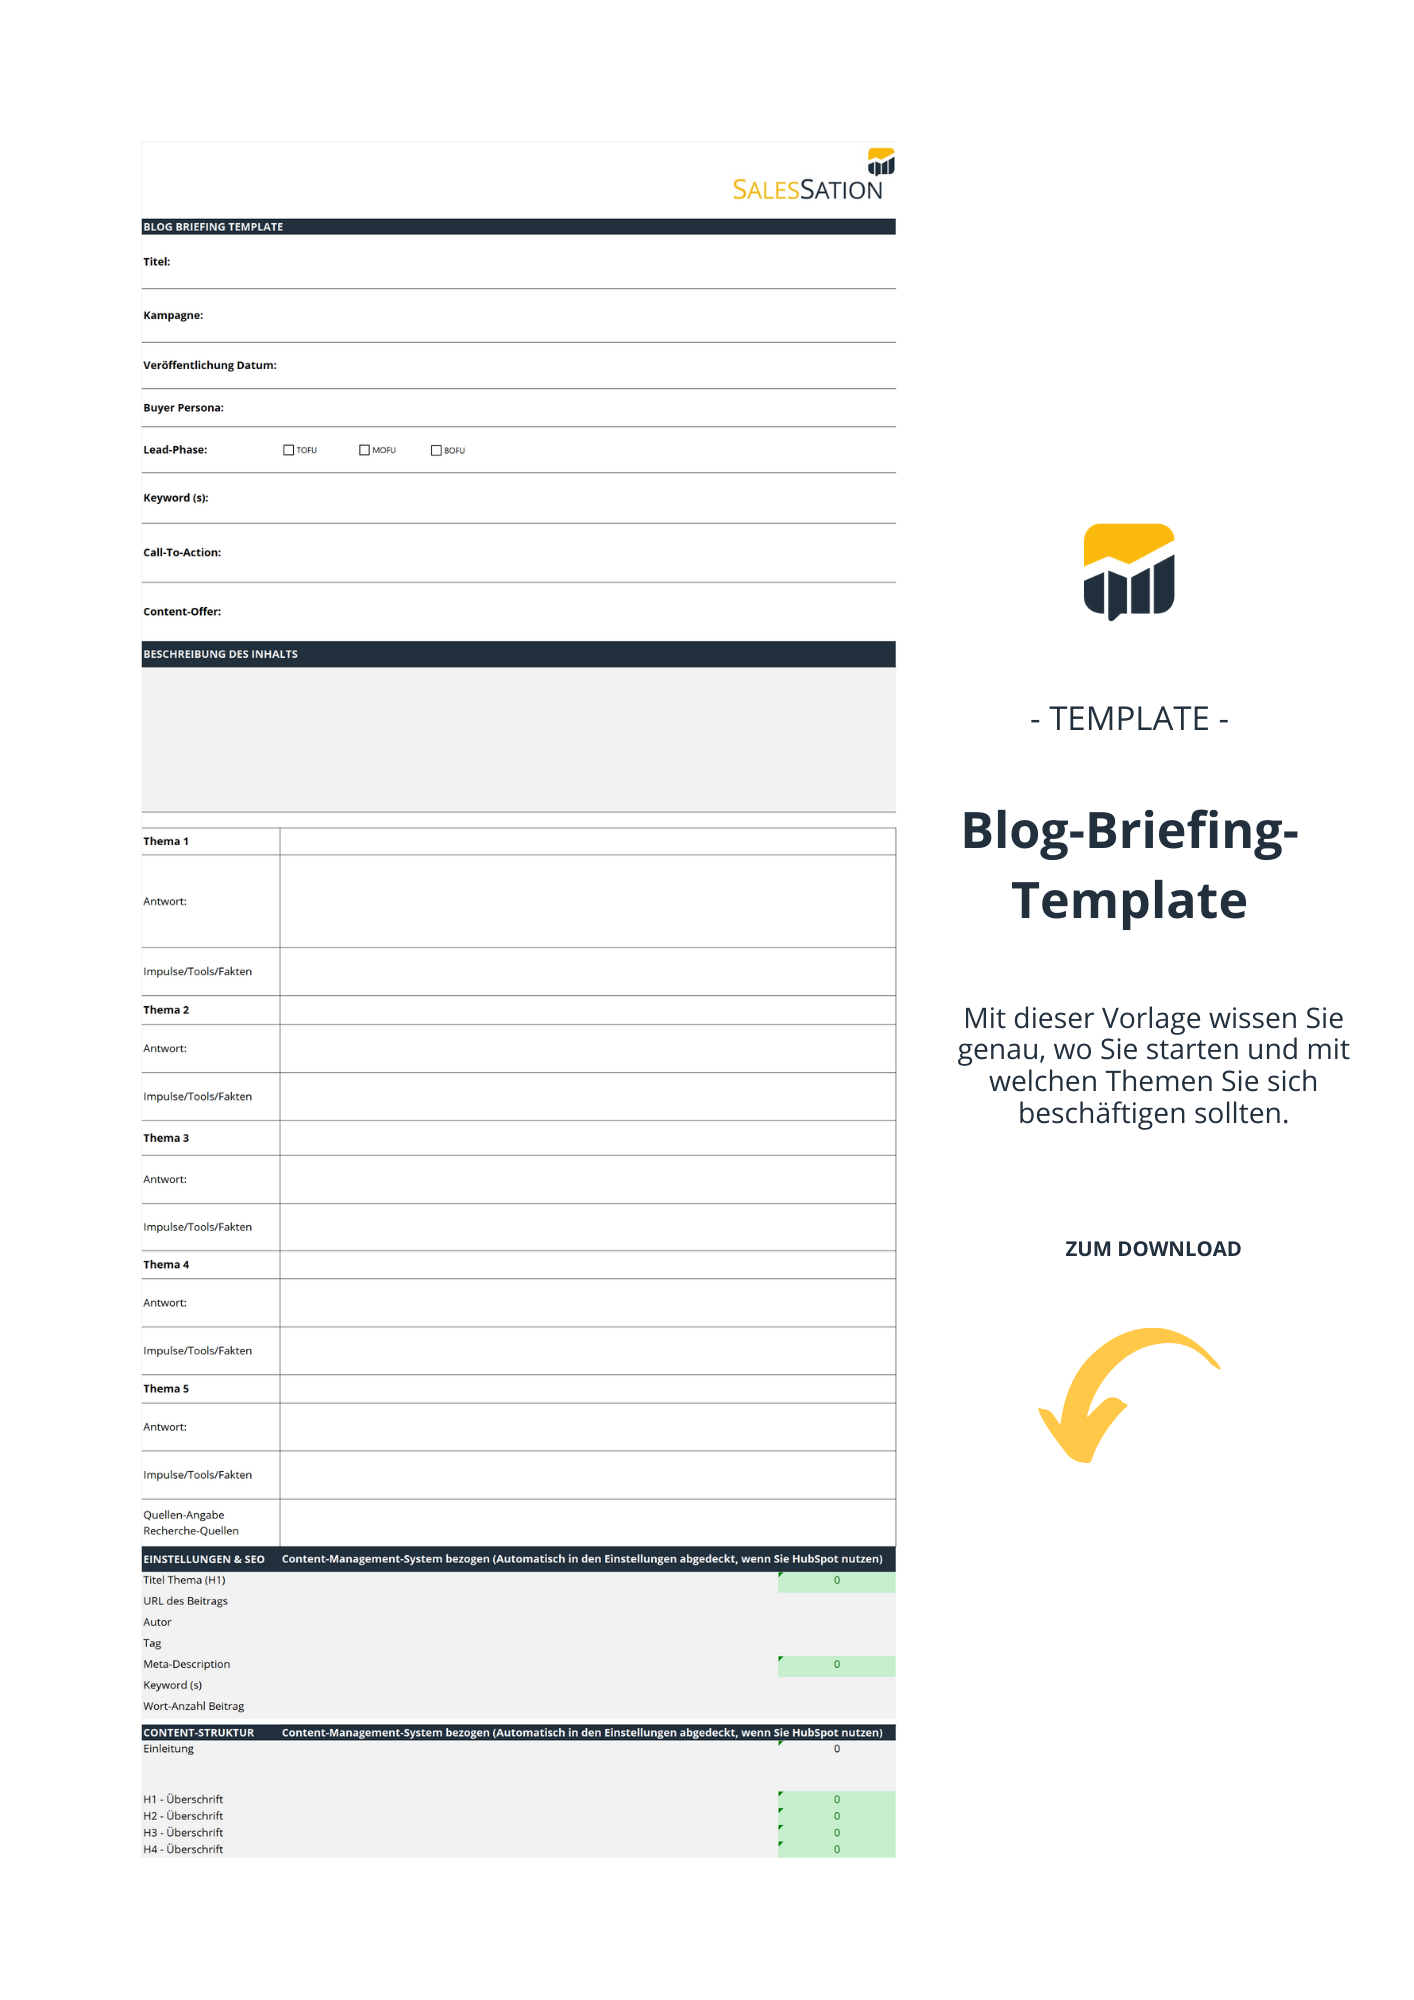 Blog-Briefing-Template-detail